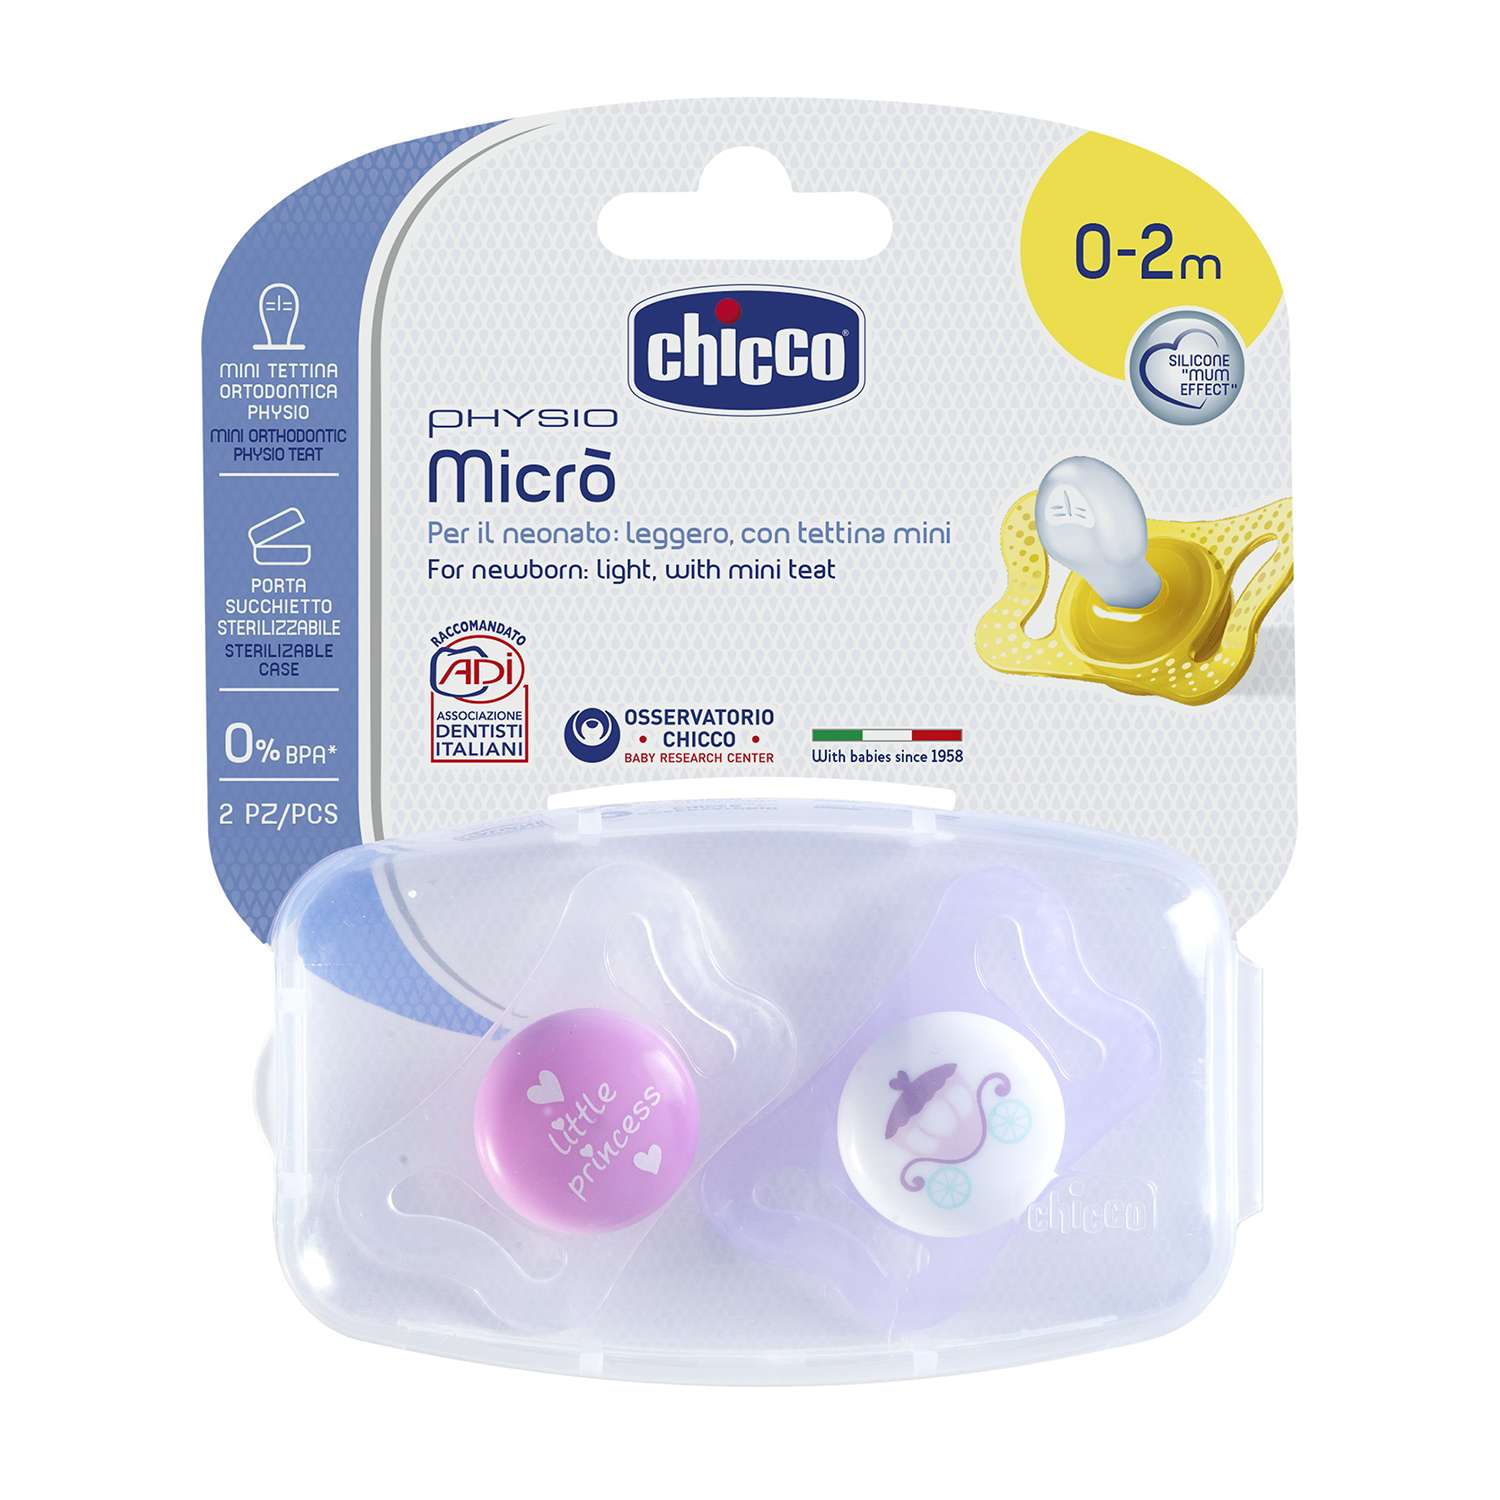 Пустышка Chicco Physio Micro 0-2 мес. для принцесс карета 2 шт силиконовая - фото 1